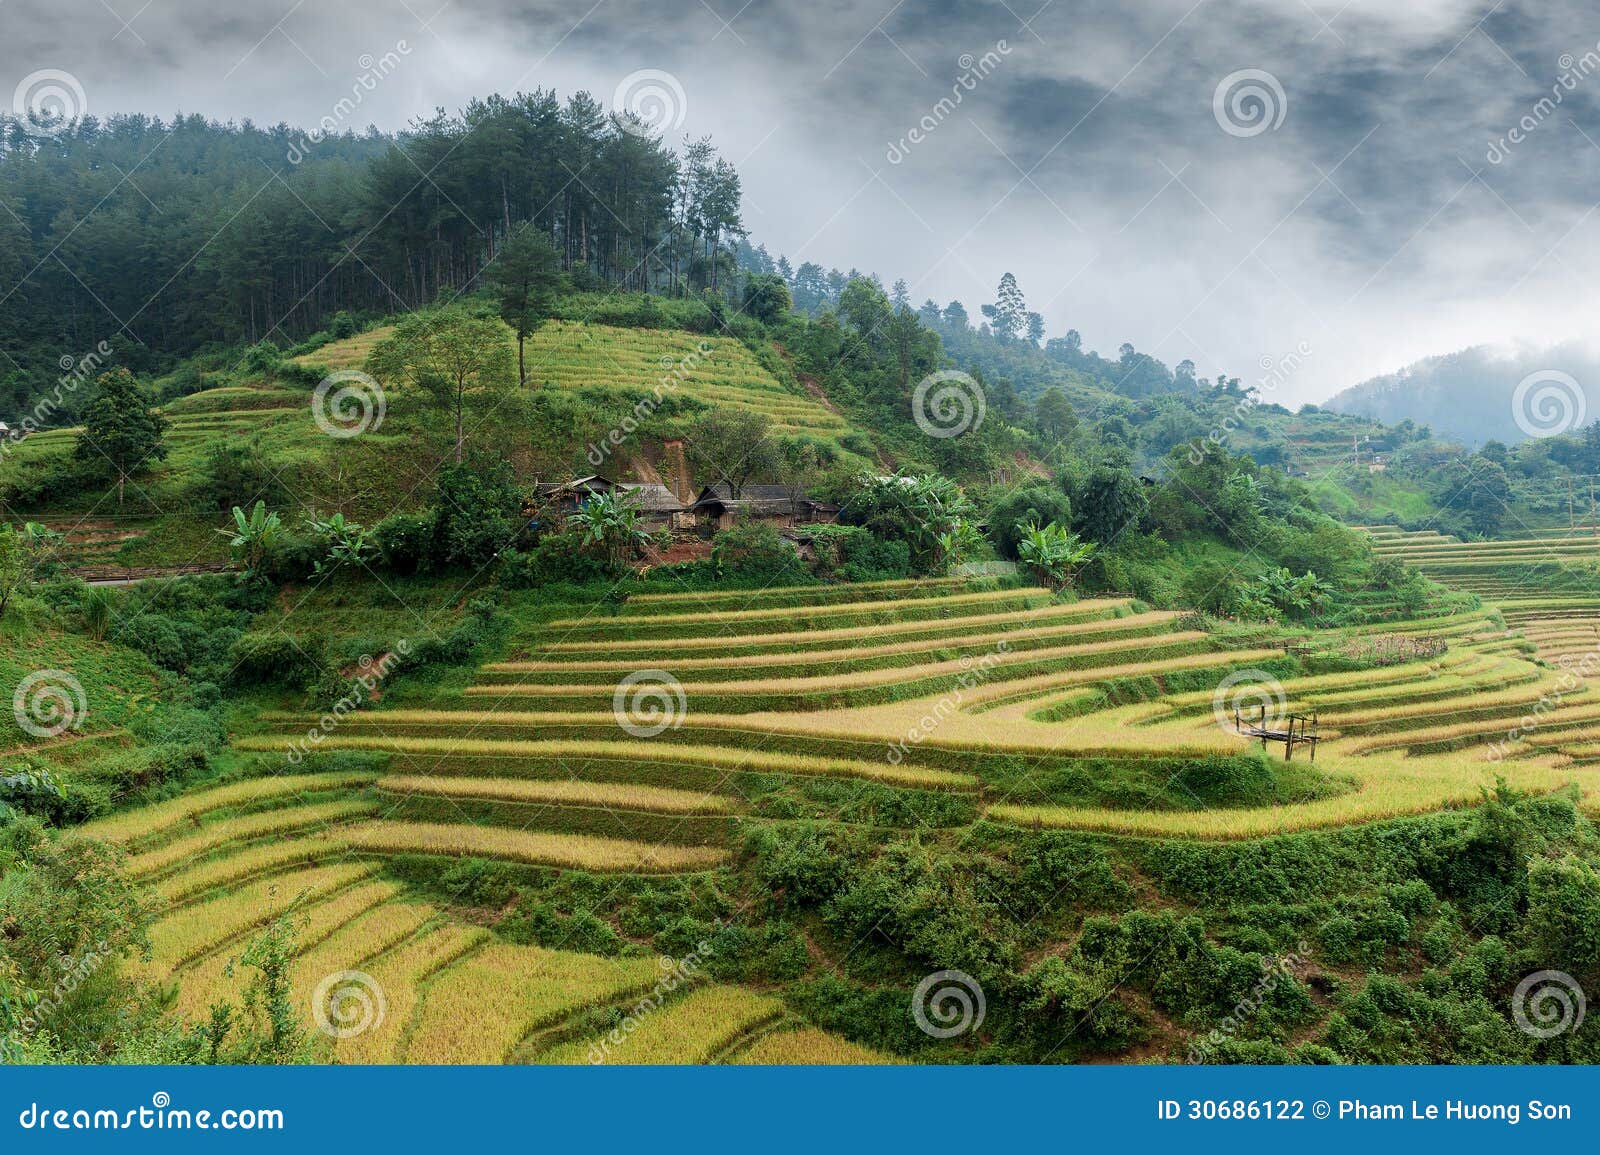 hills of rice terraced fields